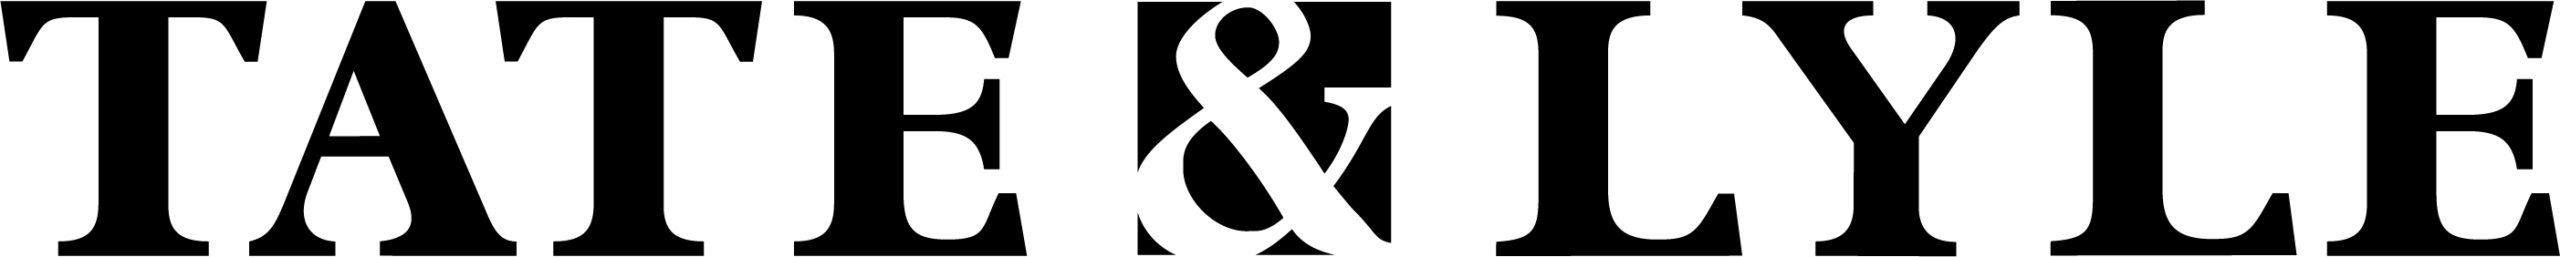 Tate & lyle logo